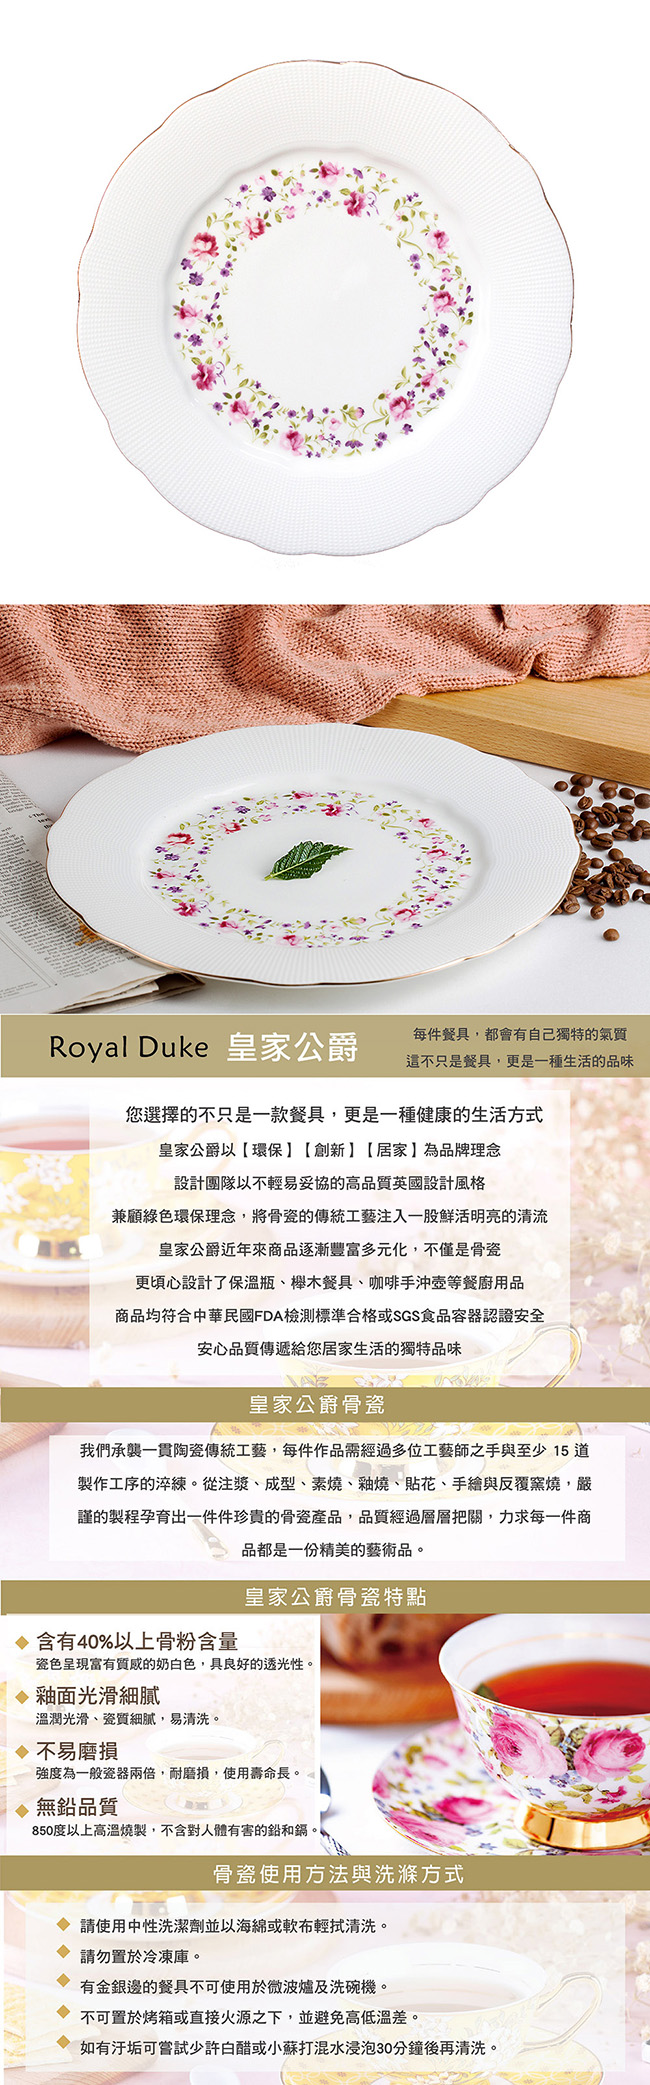 Royal Duke 秘密花園10.5吋骨瓷平盤/點心盤(典雅英式風格)